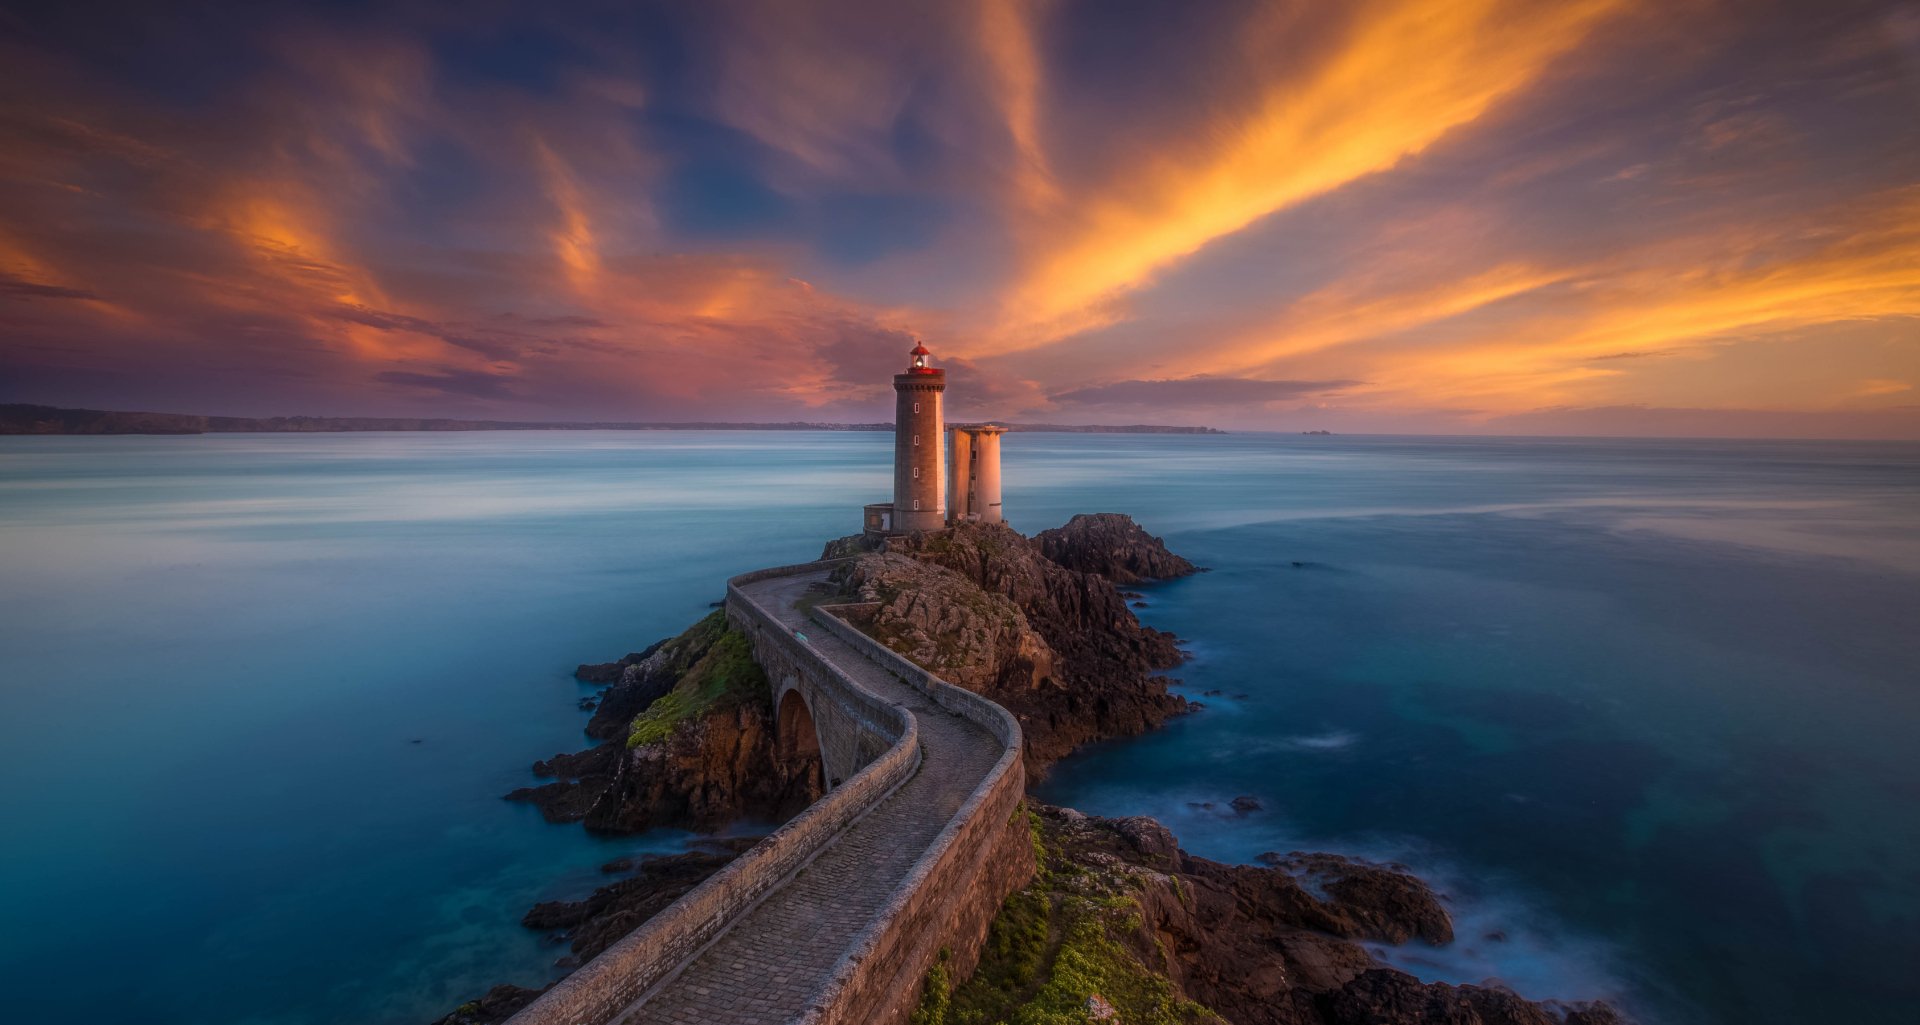 Download Bridge Building Sunset Sea Ocean Man Made Lighthouse  HD Wallpaper by Dennis Liang